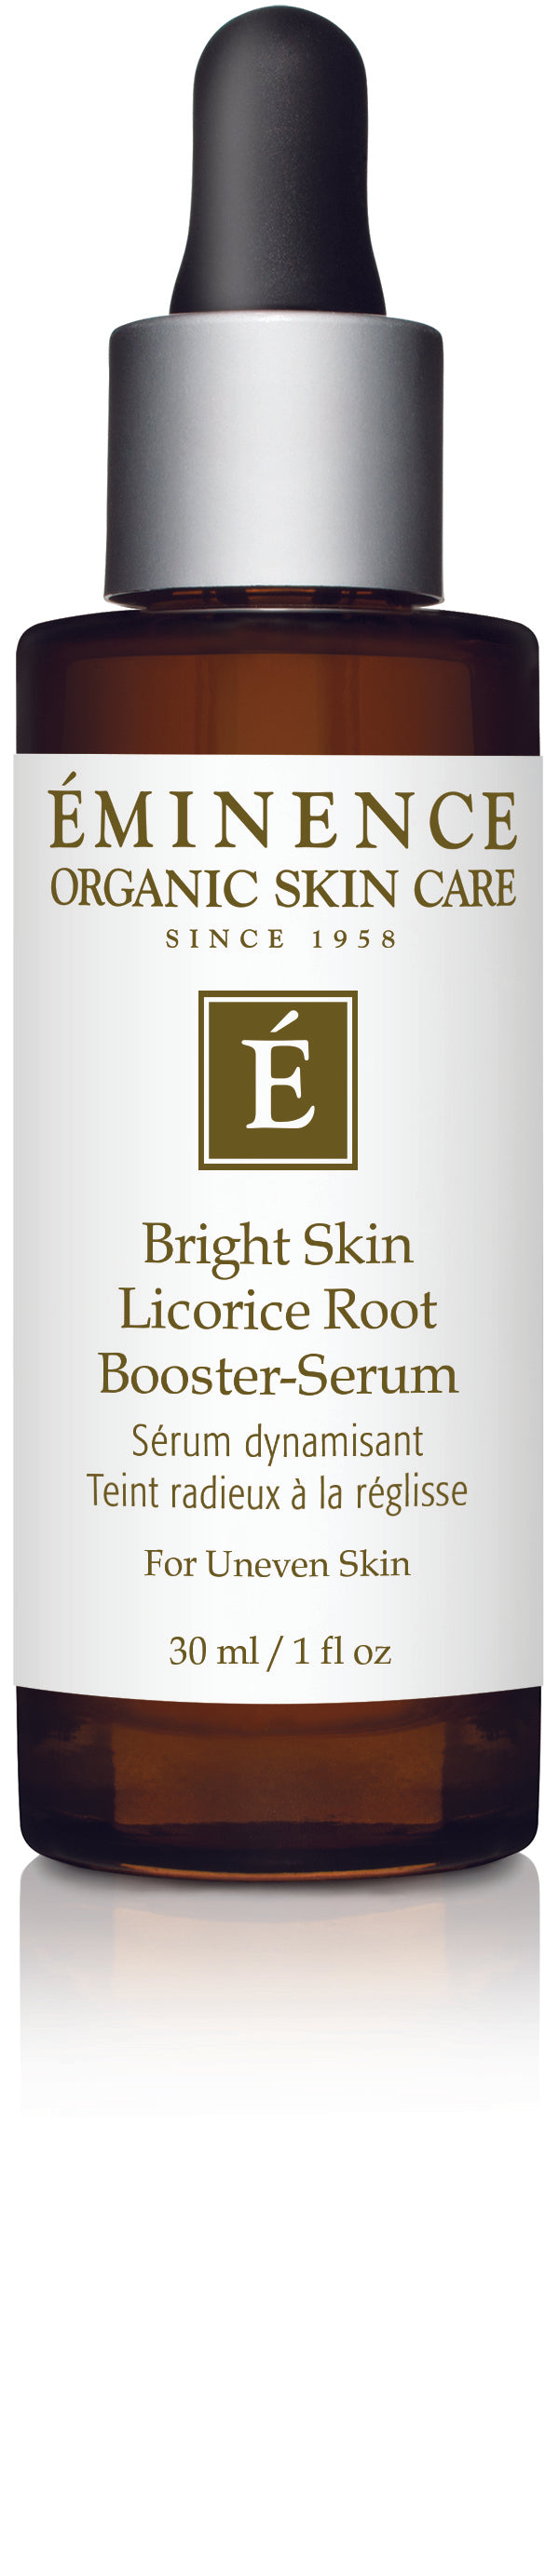 Buy Eminence Bright Skin Licorice Root Booster Serum - 30ml in Pakistan